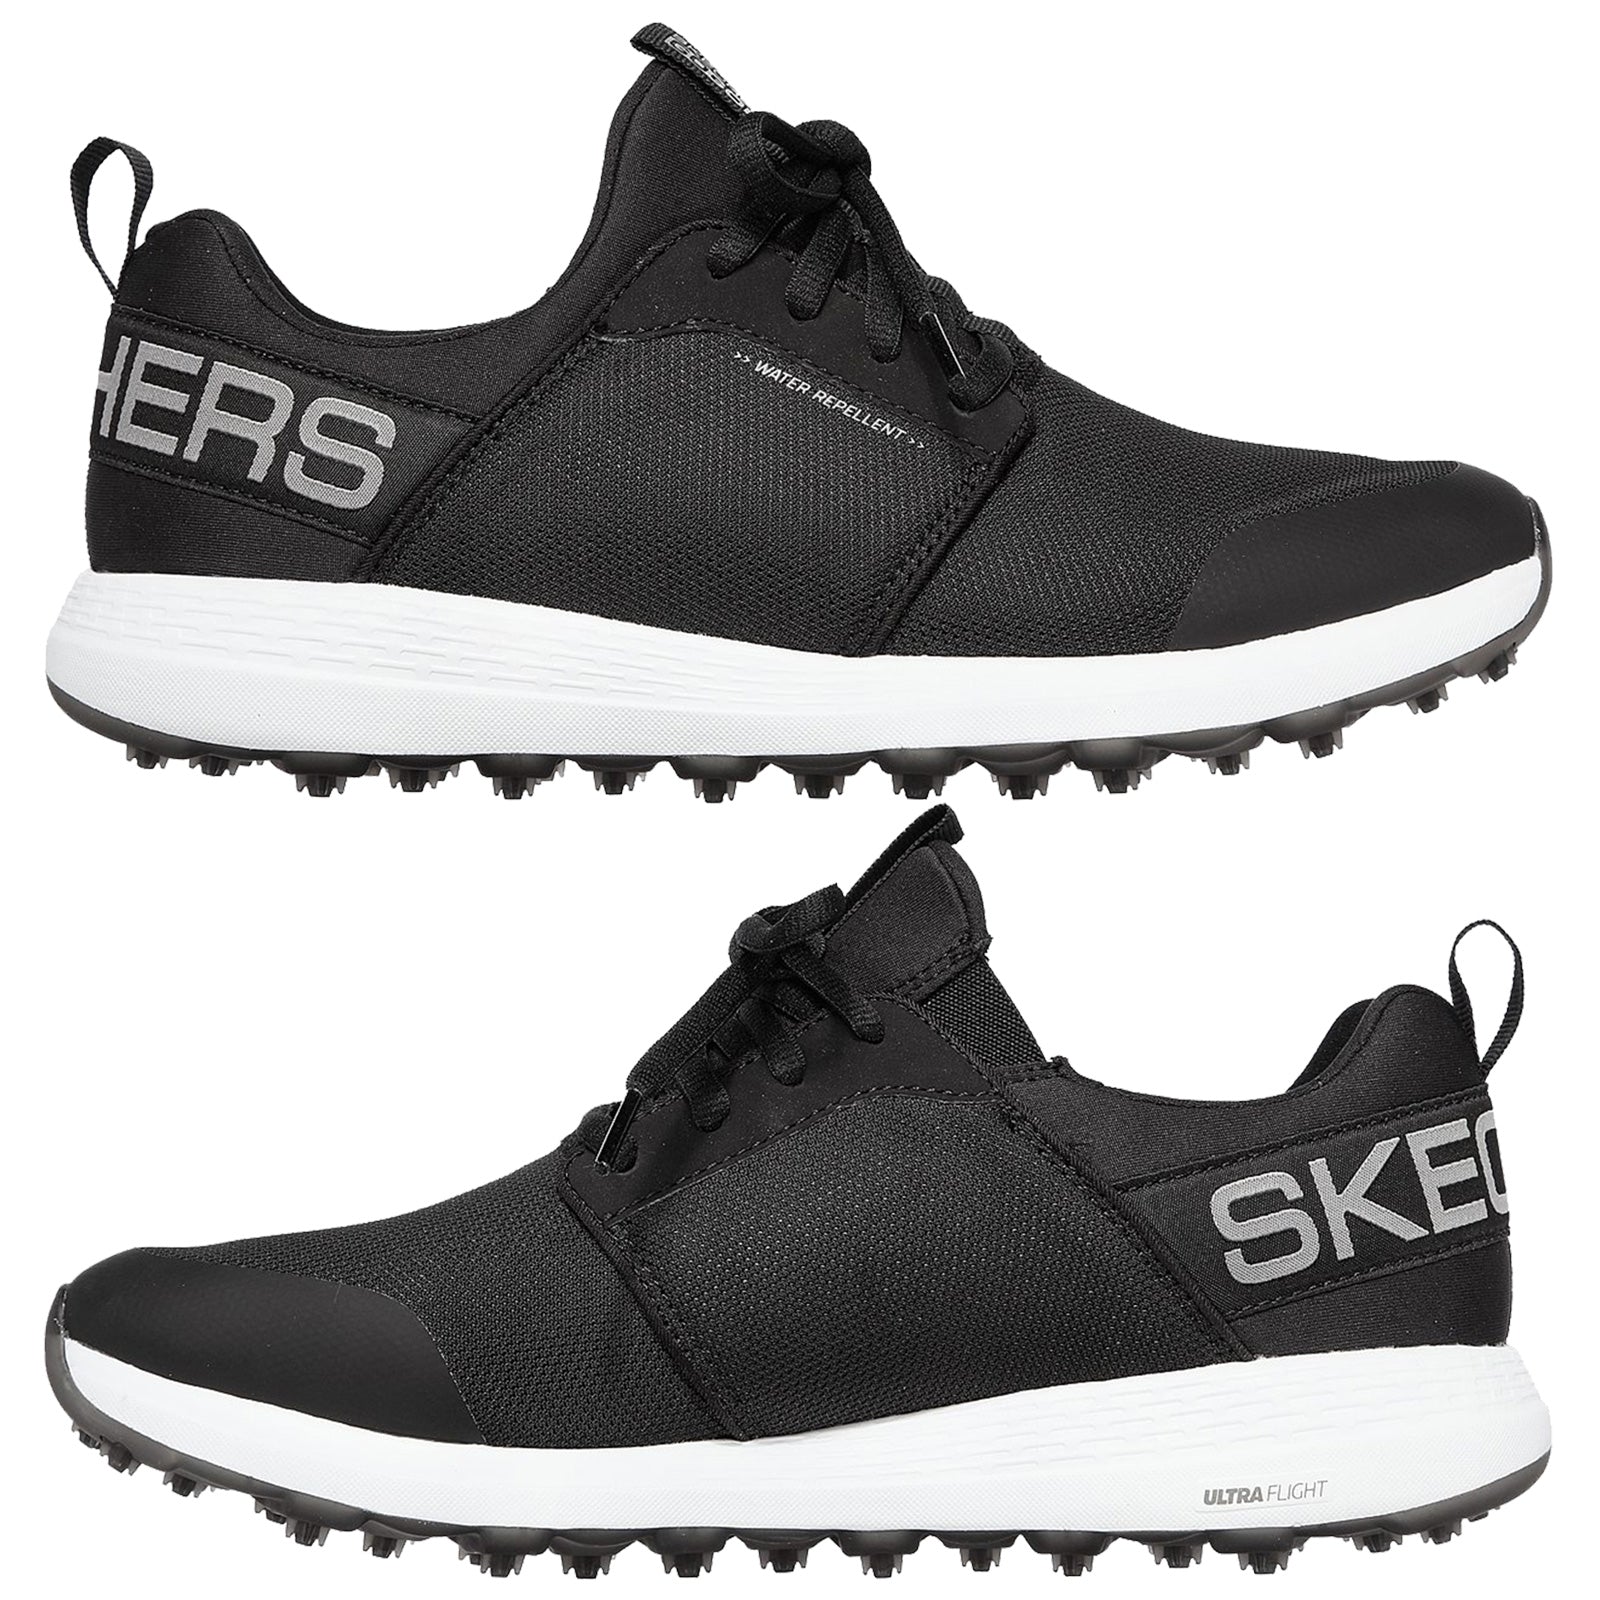 Skechers Mens Max Sport Golf Shoes